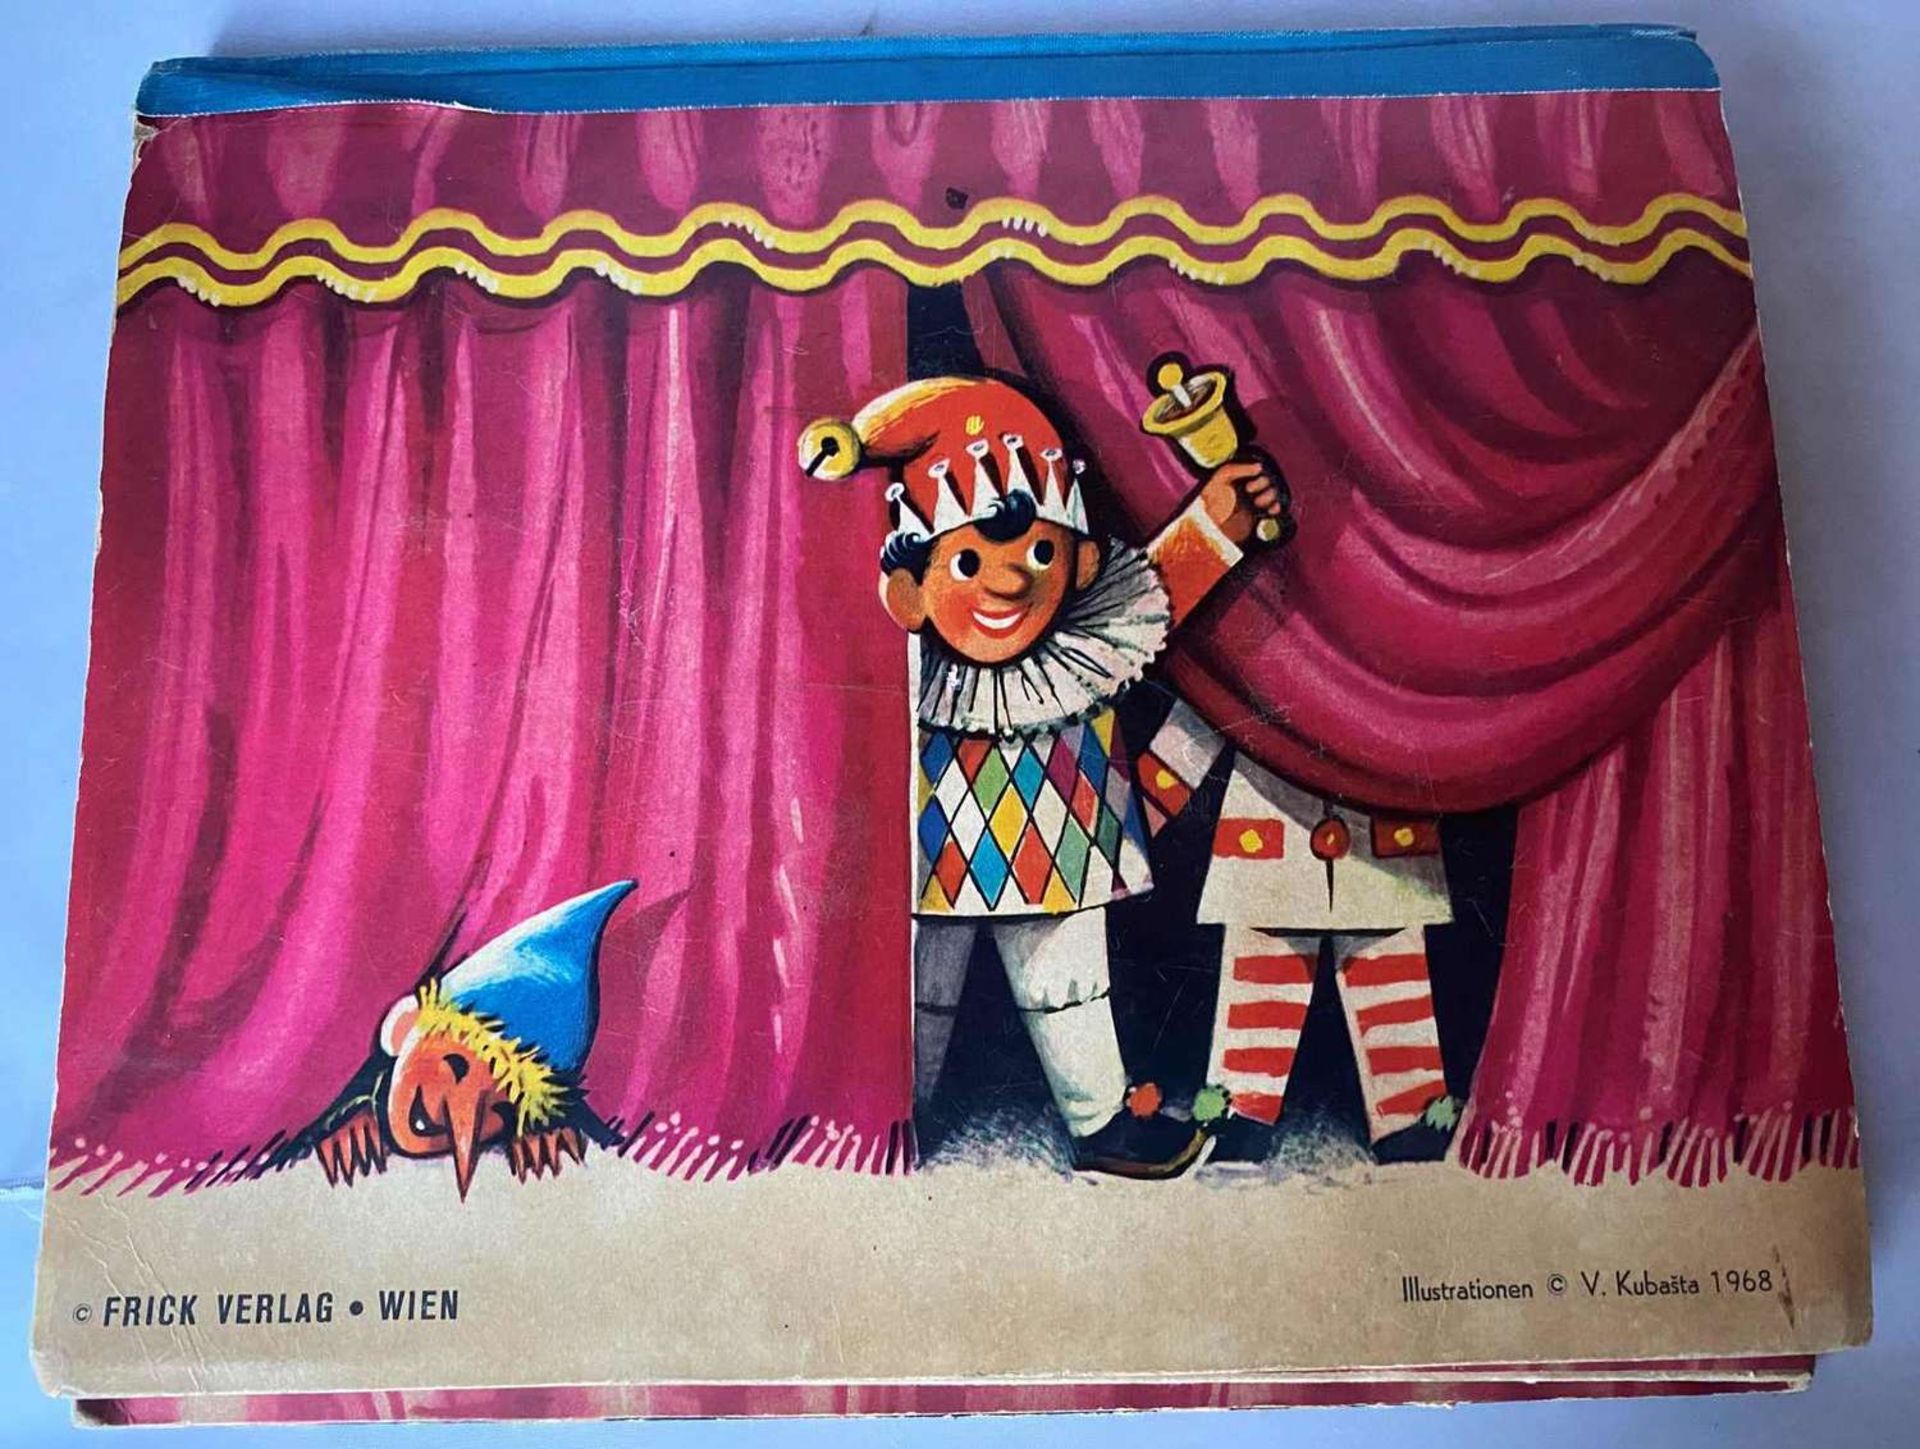 Kinderbuch : Kinder seid ihr alle da ? - Pop-up-Buch, Frick Verlag - Wien. Illustrationen V. Kubast - Image 6 of 6